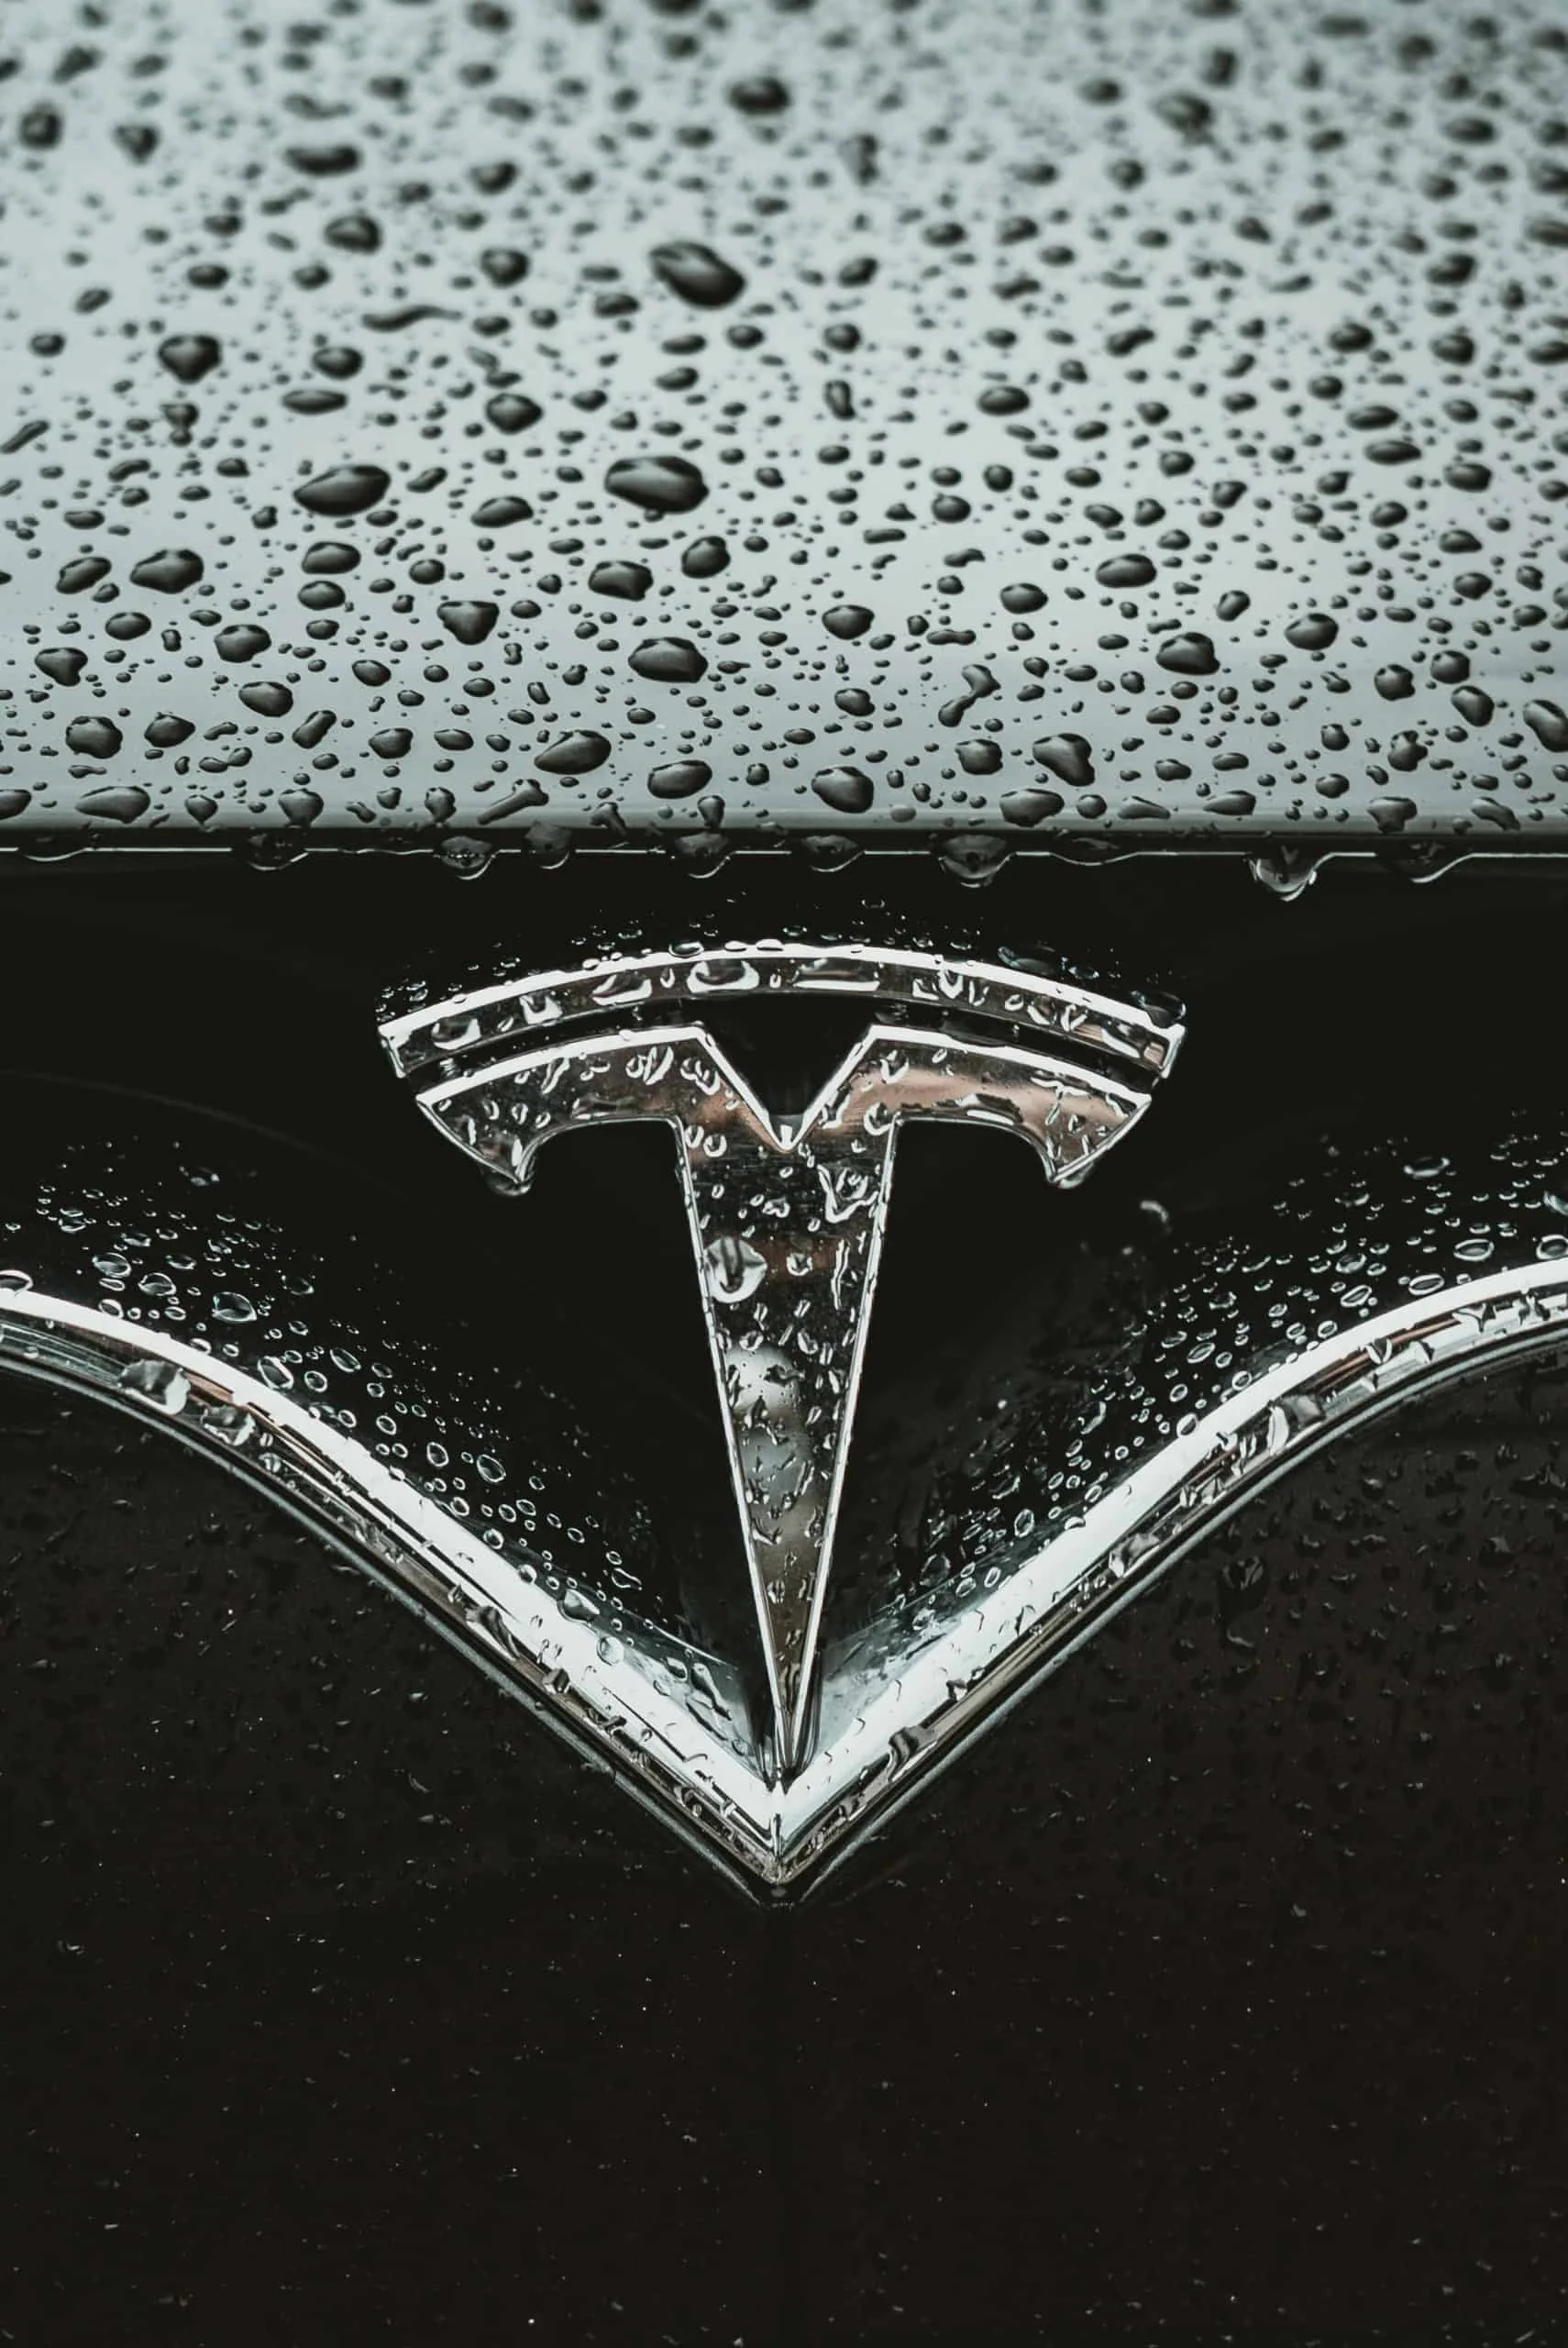 andreas-dress-Tesla front emblem on hood grill beads of rain water over black hood unsplash-1-scaled